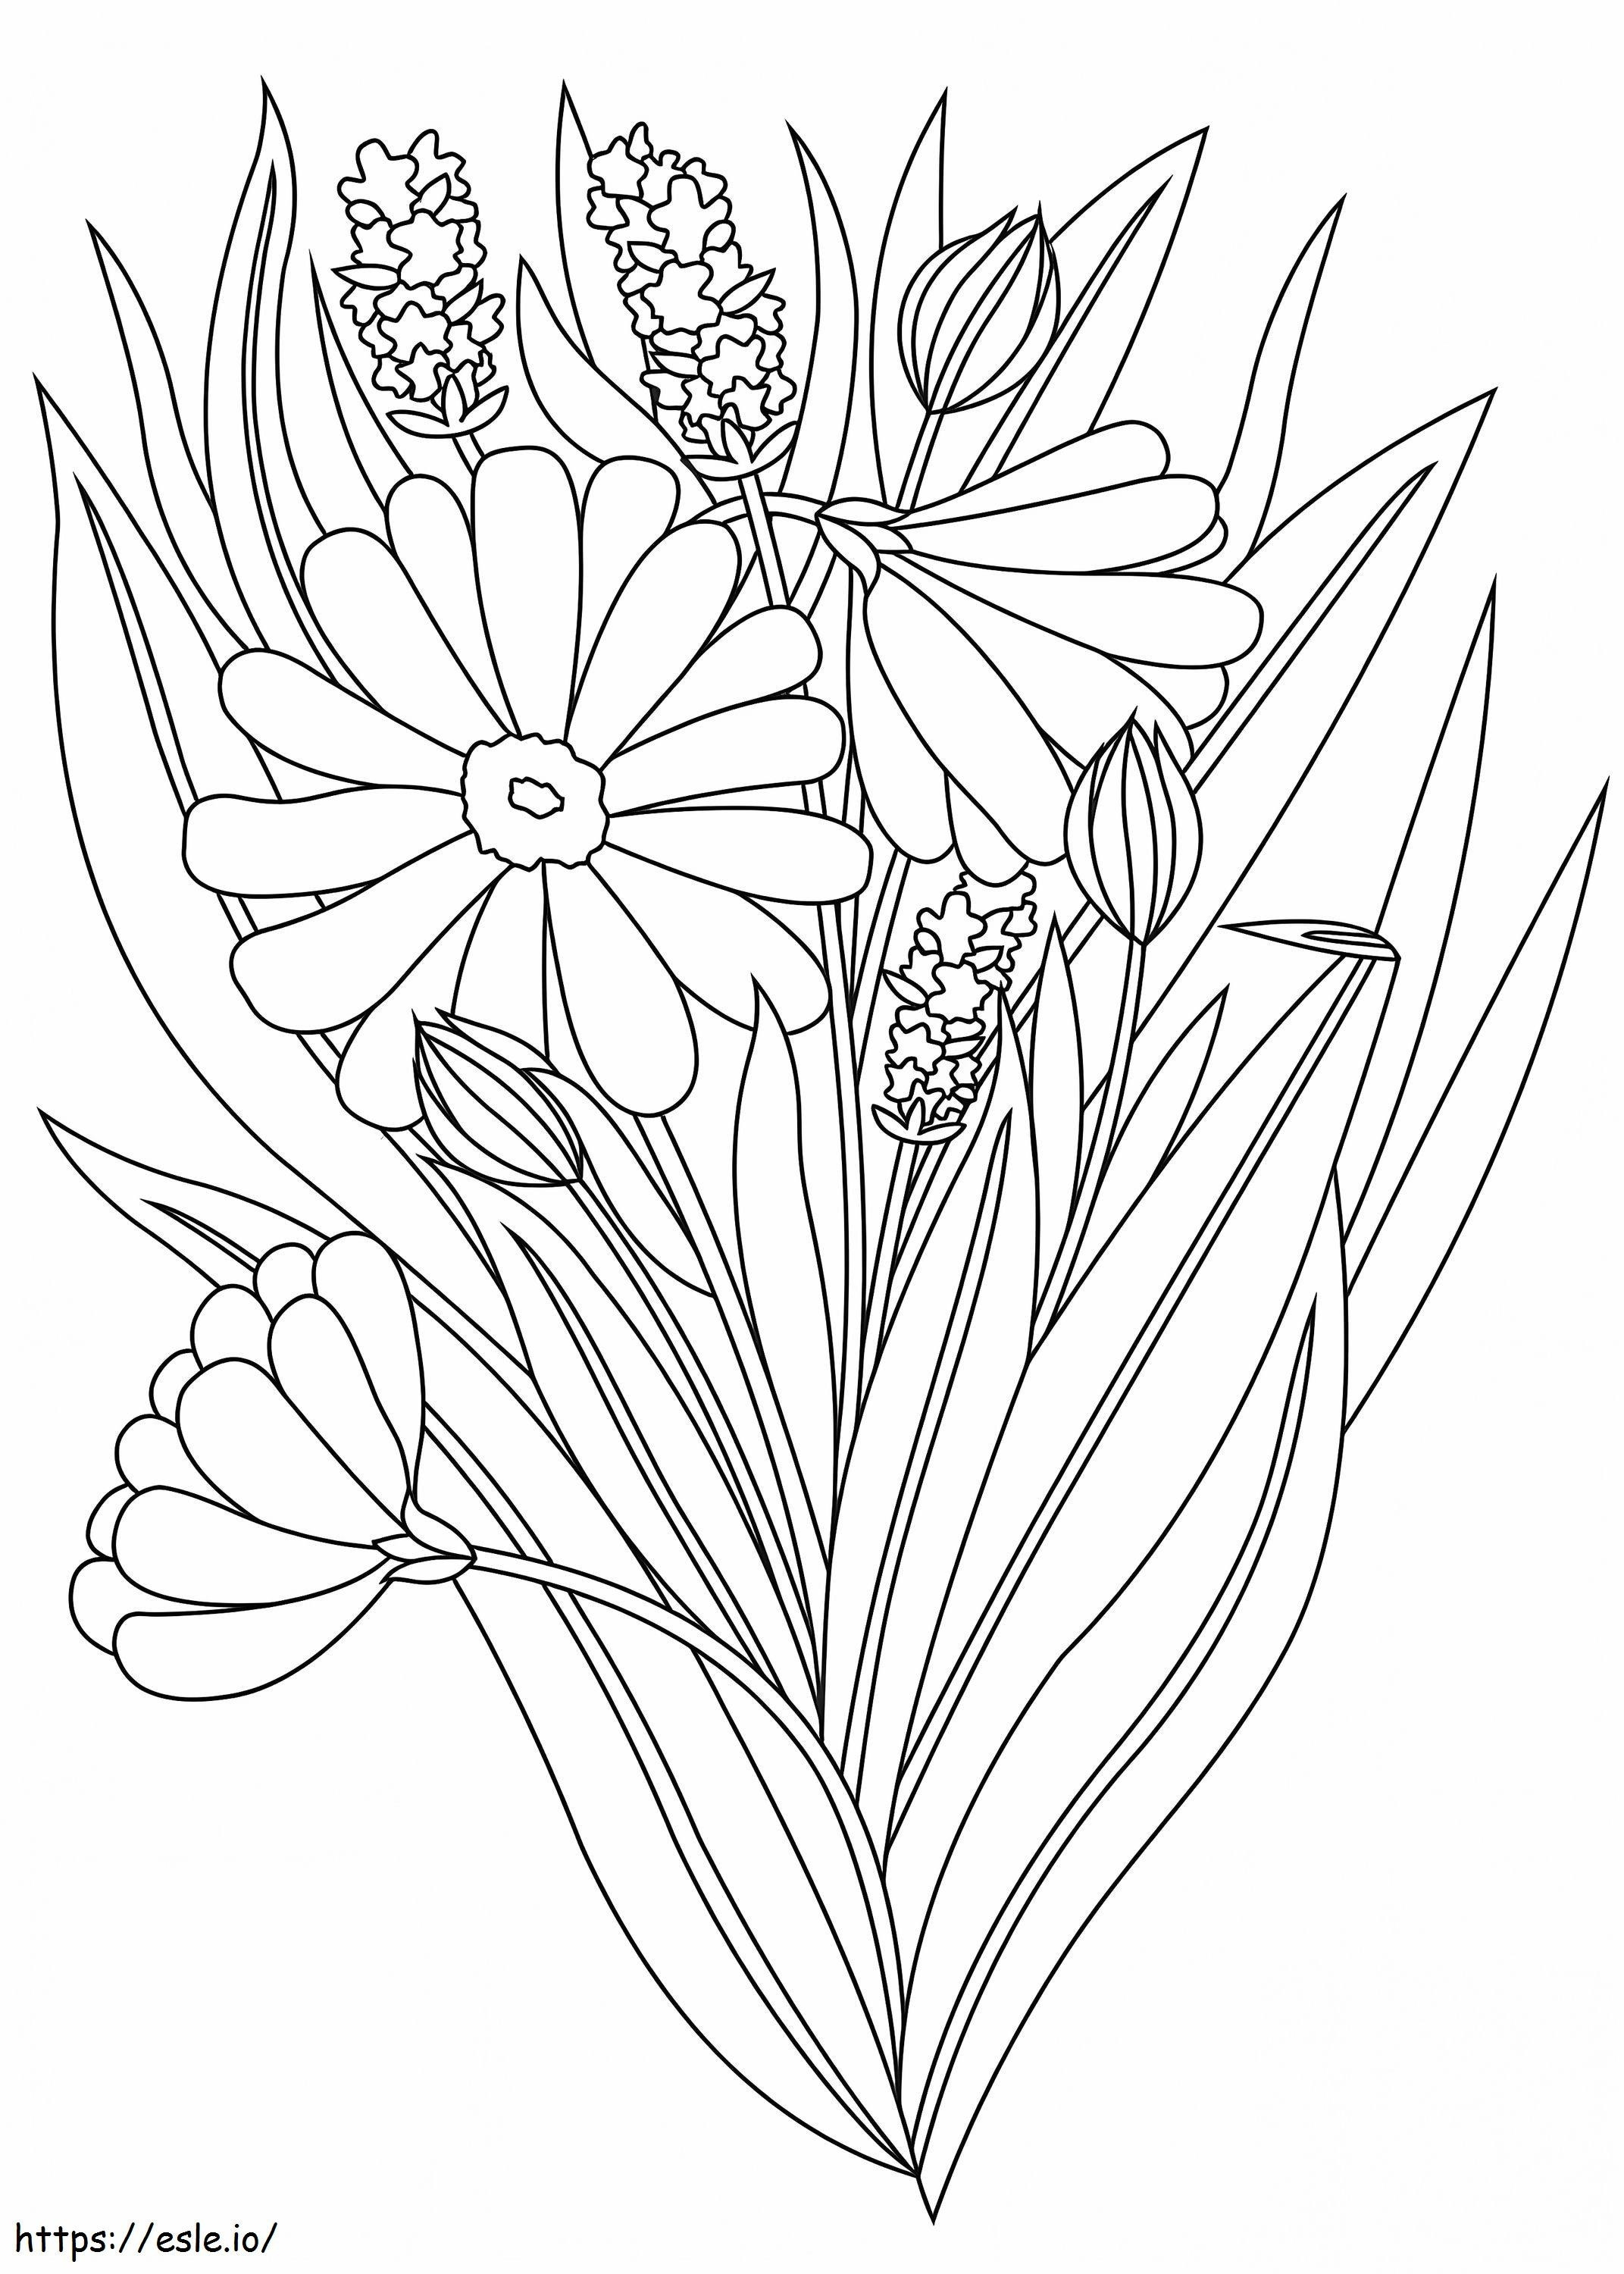 Flower Bouquet 1 coloring page